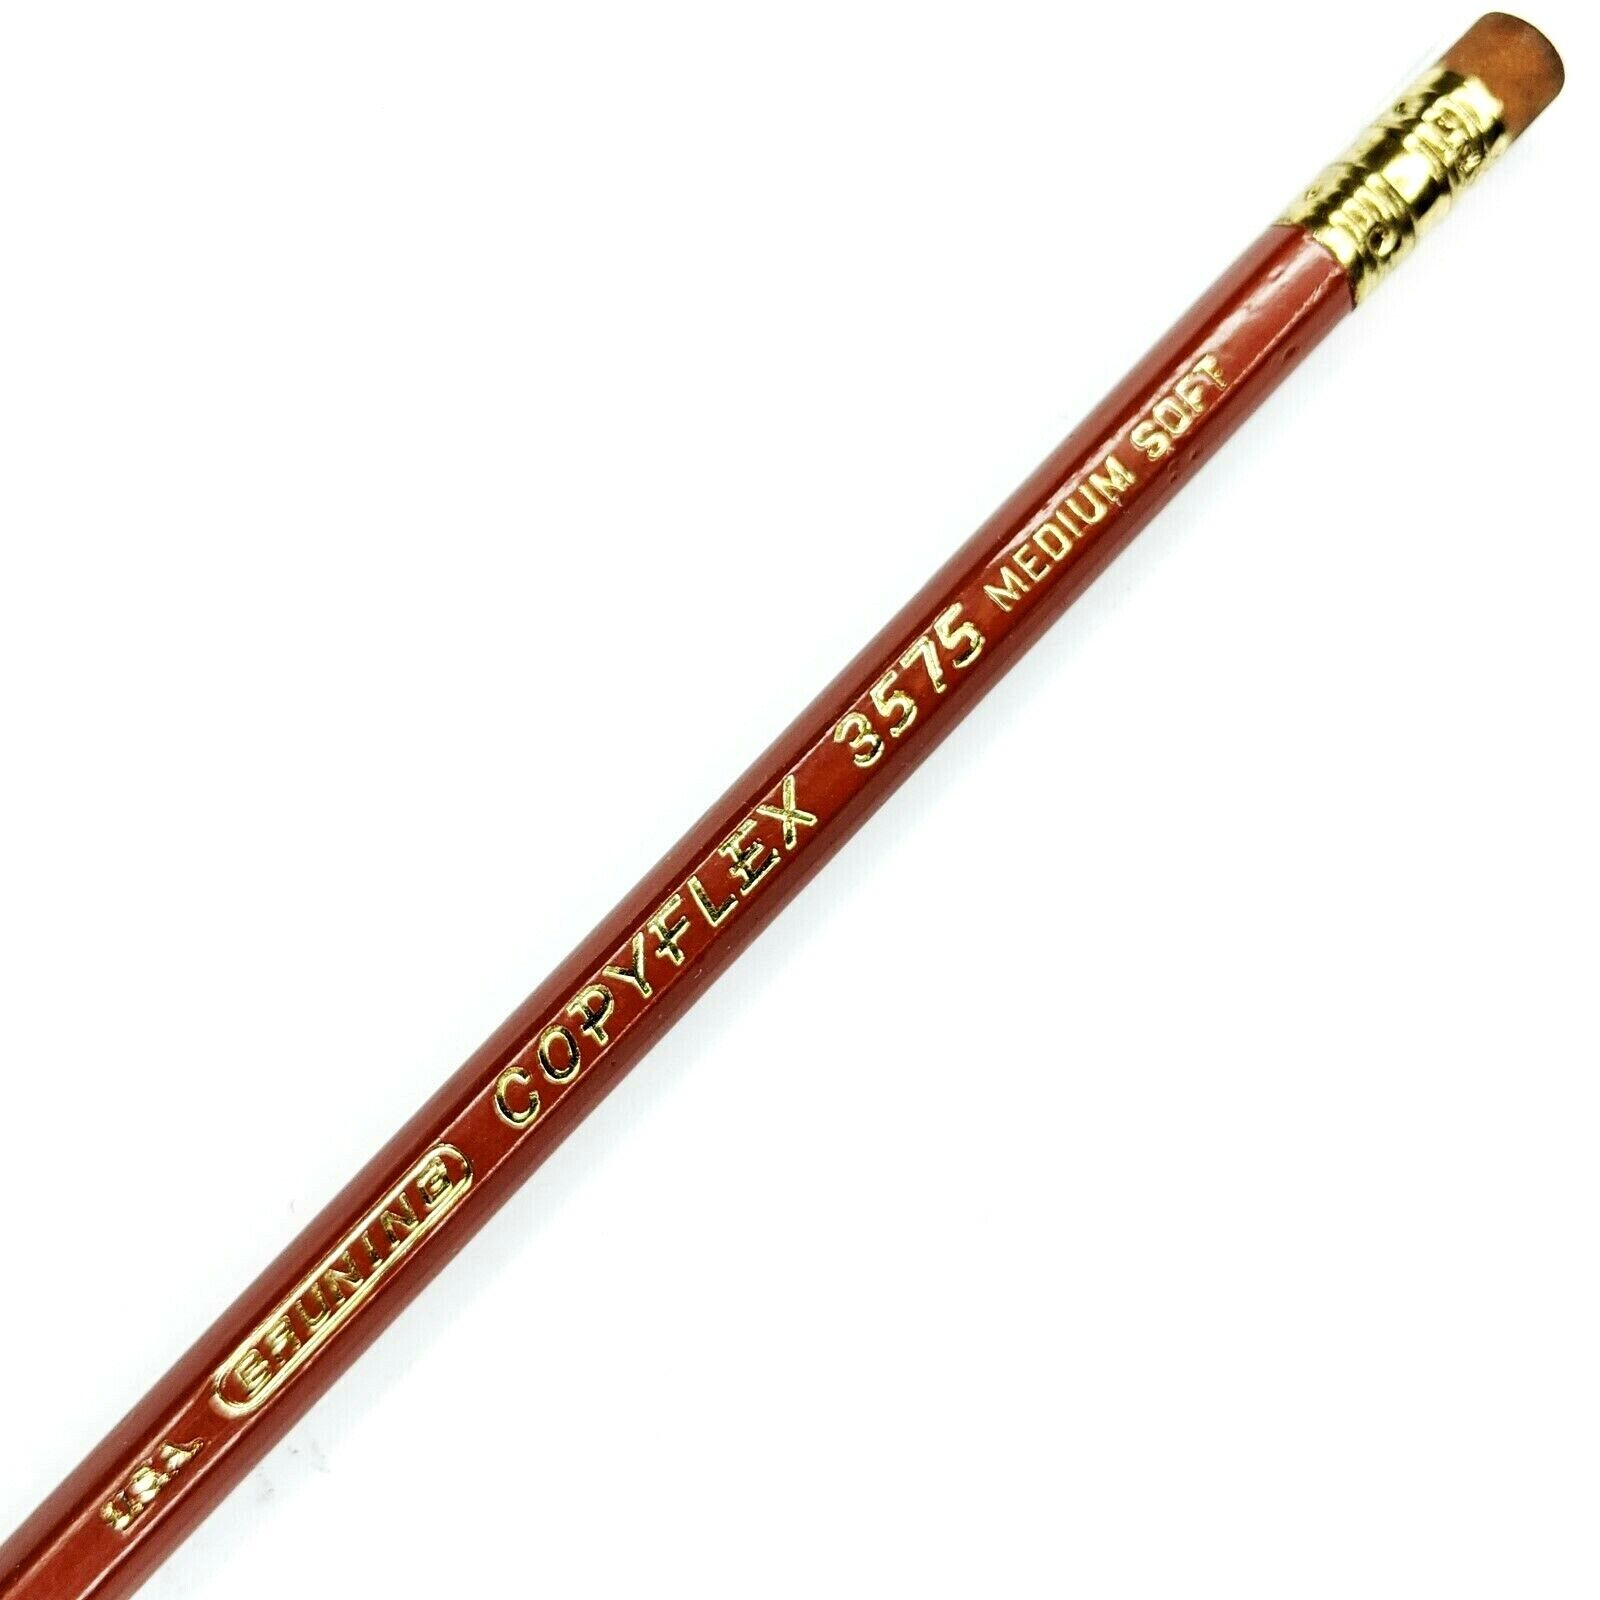 c1950s Bruning 3575 Copyflex Wood Pencil Medium Soft Unsharpened Brown USA G30